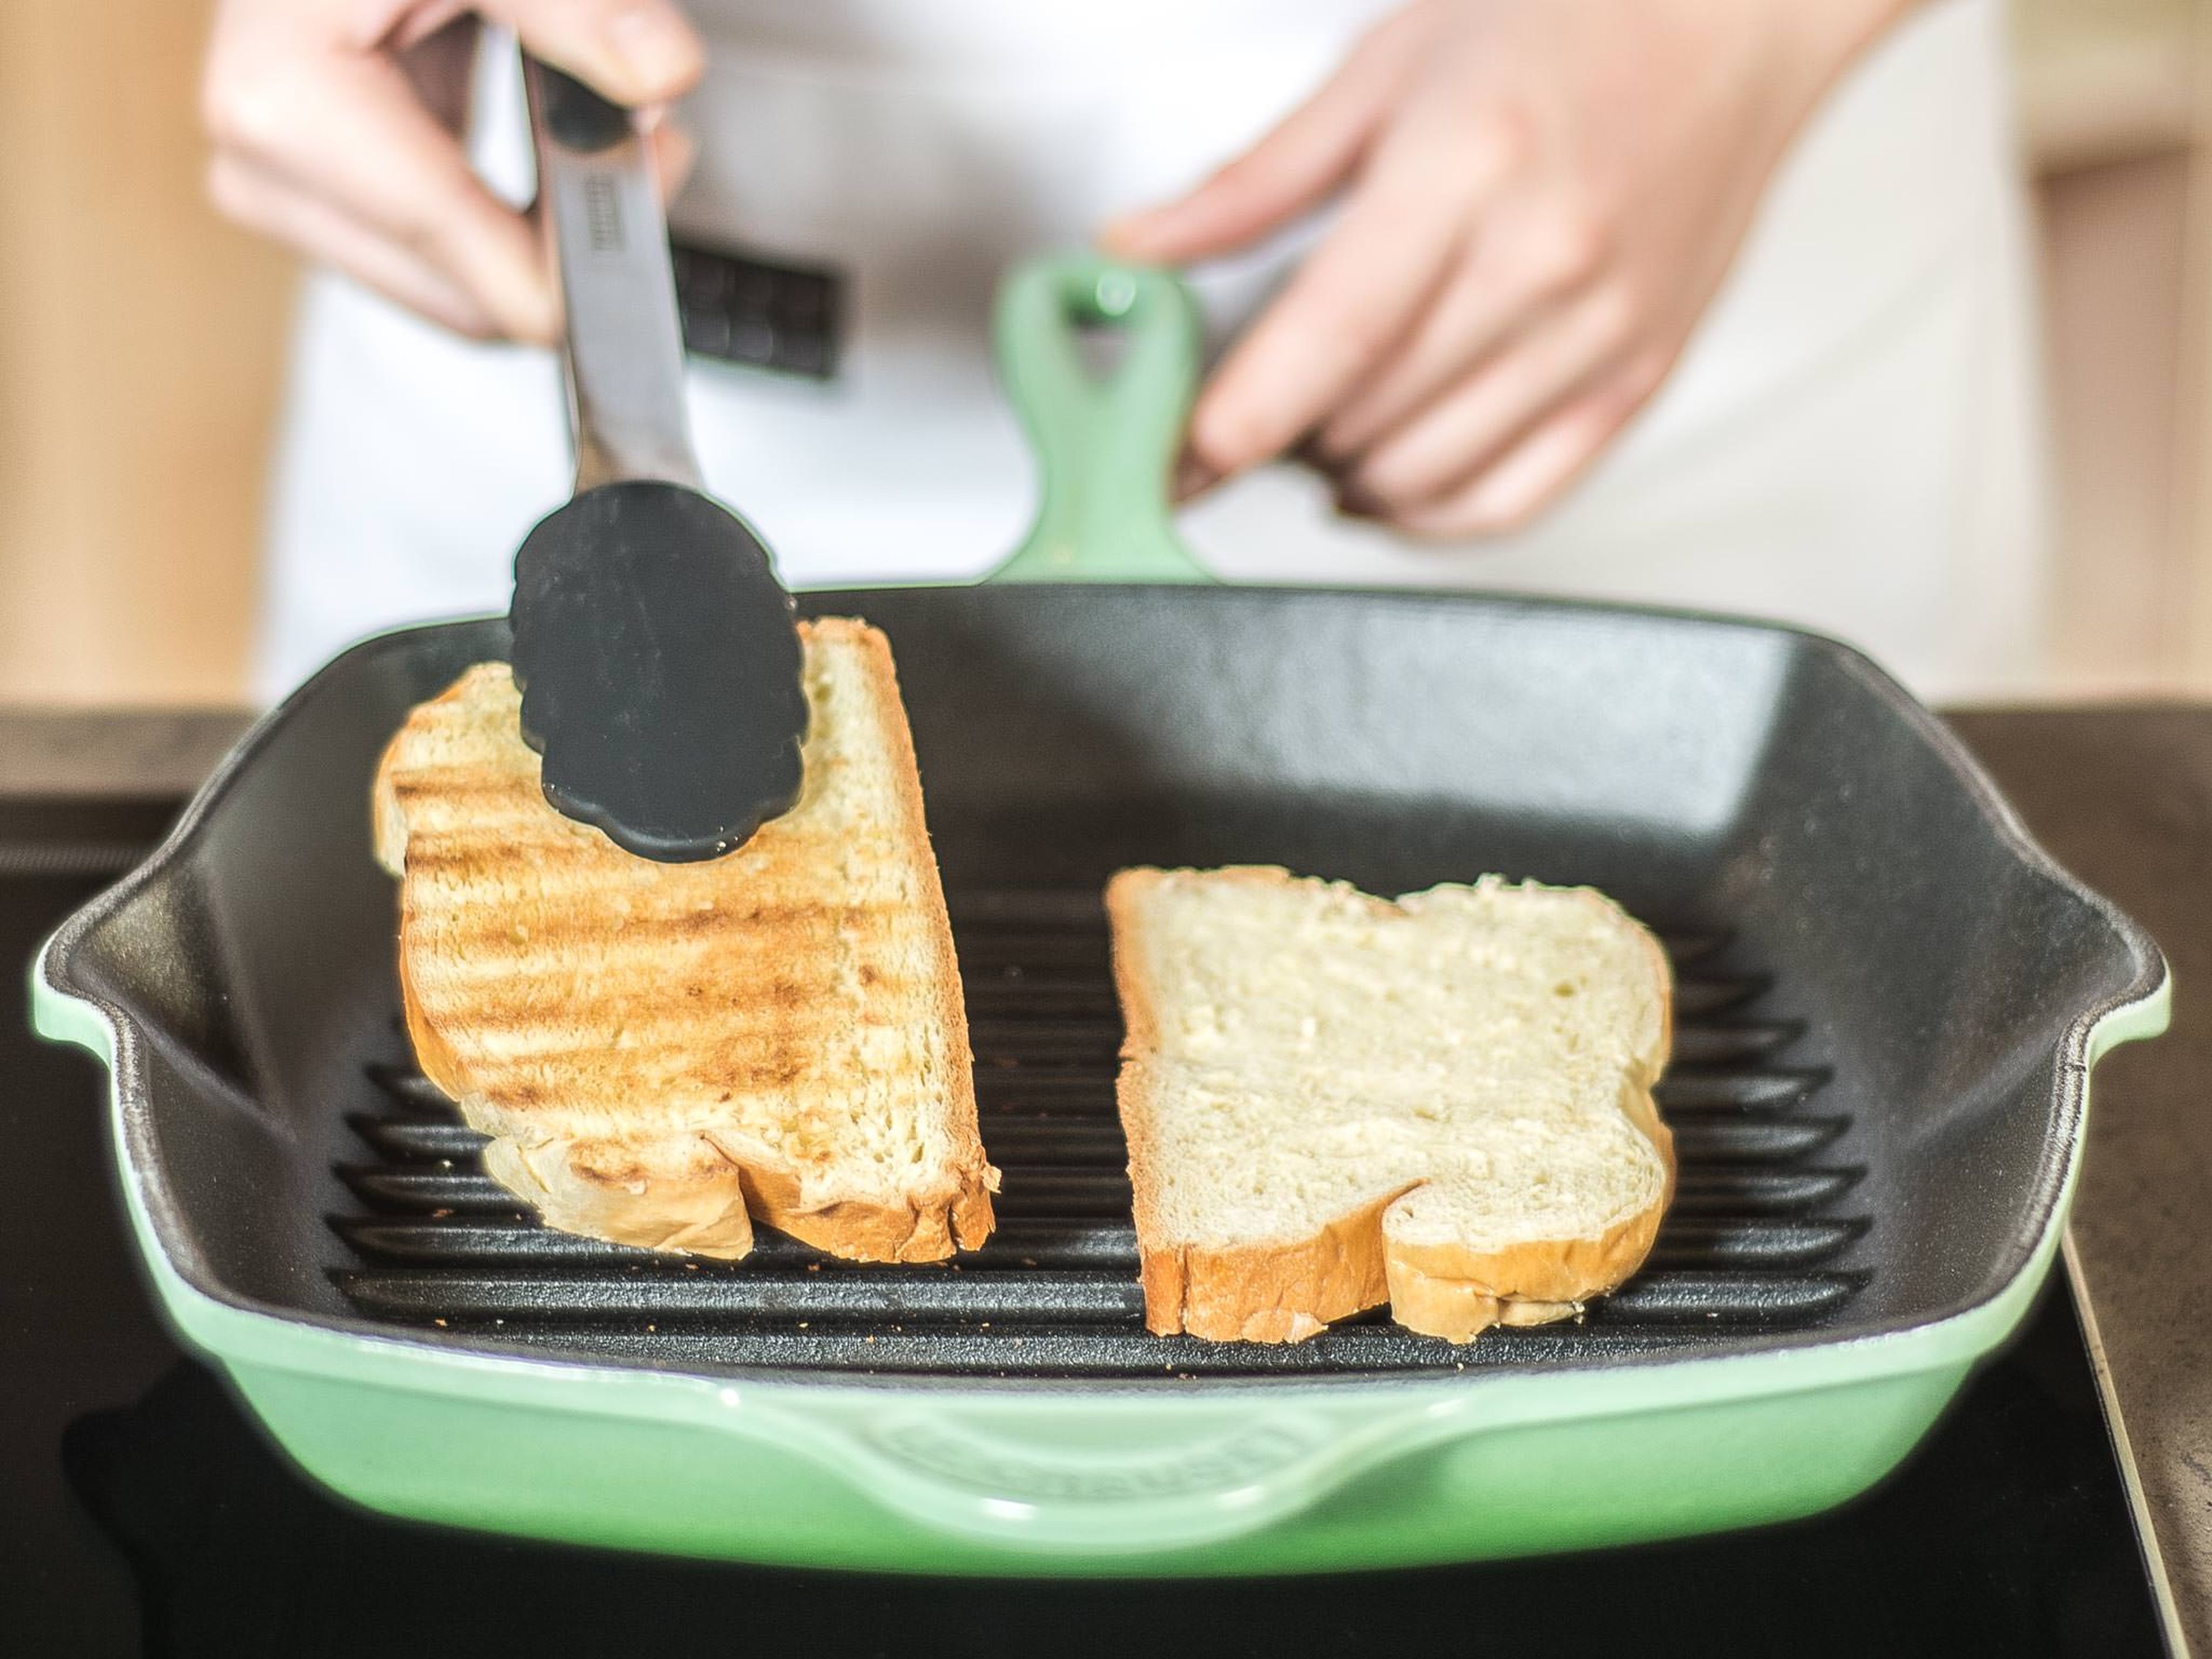 Preheat the oven to 180°C/355°F. Lightly toast brioche.